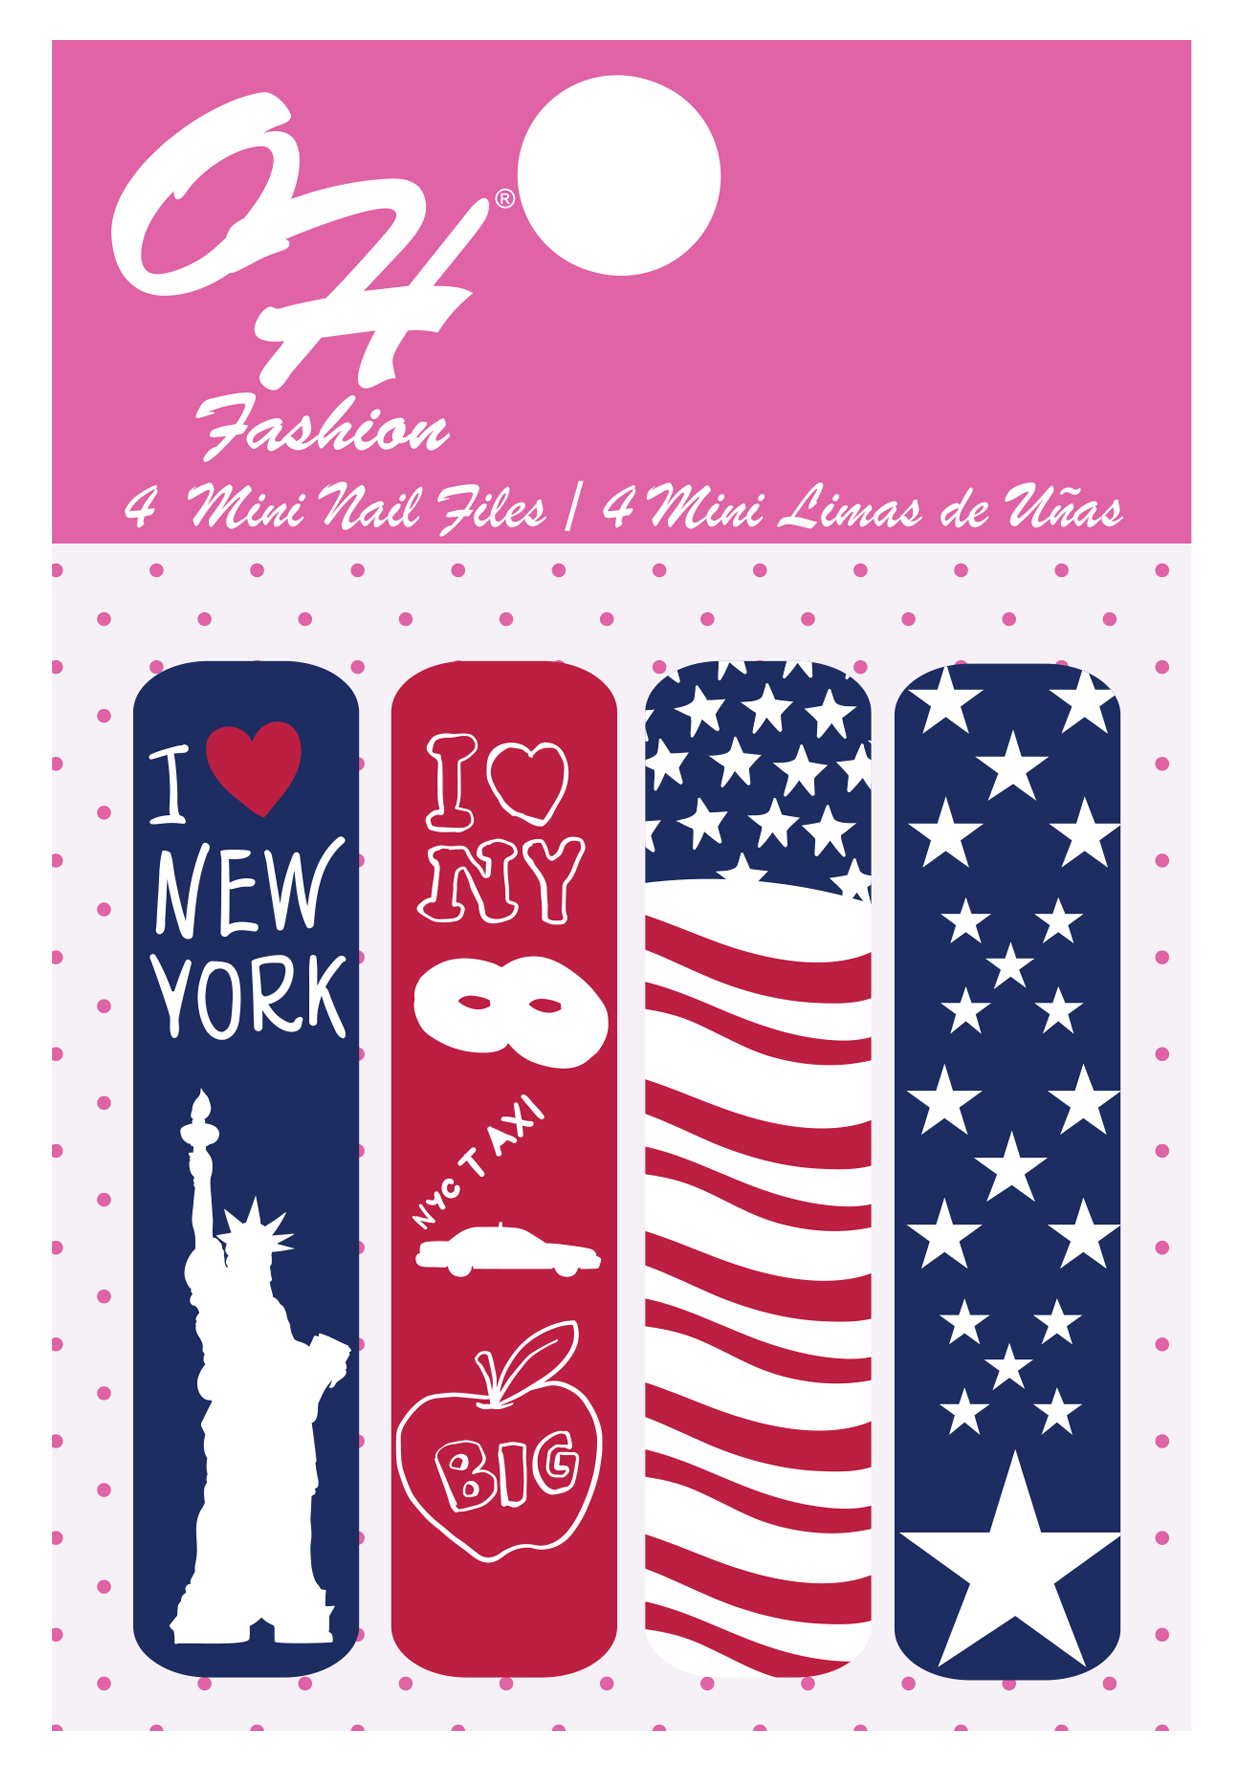 OH Fashion Mini Nail Files USA New York 🗽 | Pink Hector